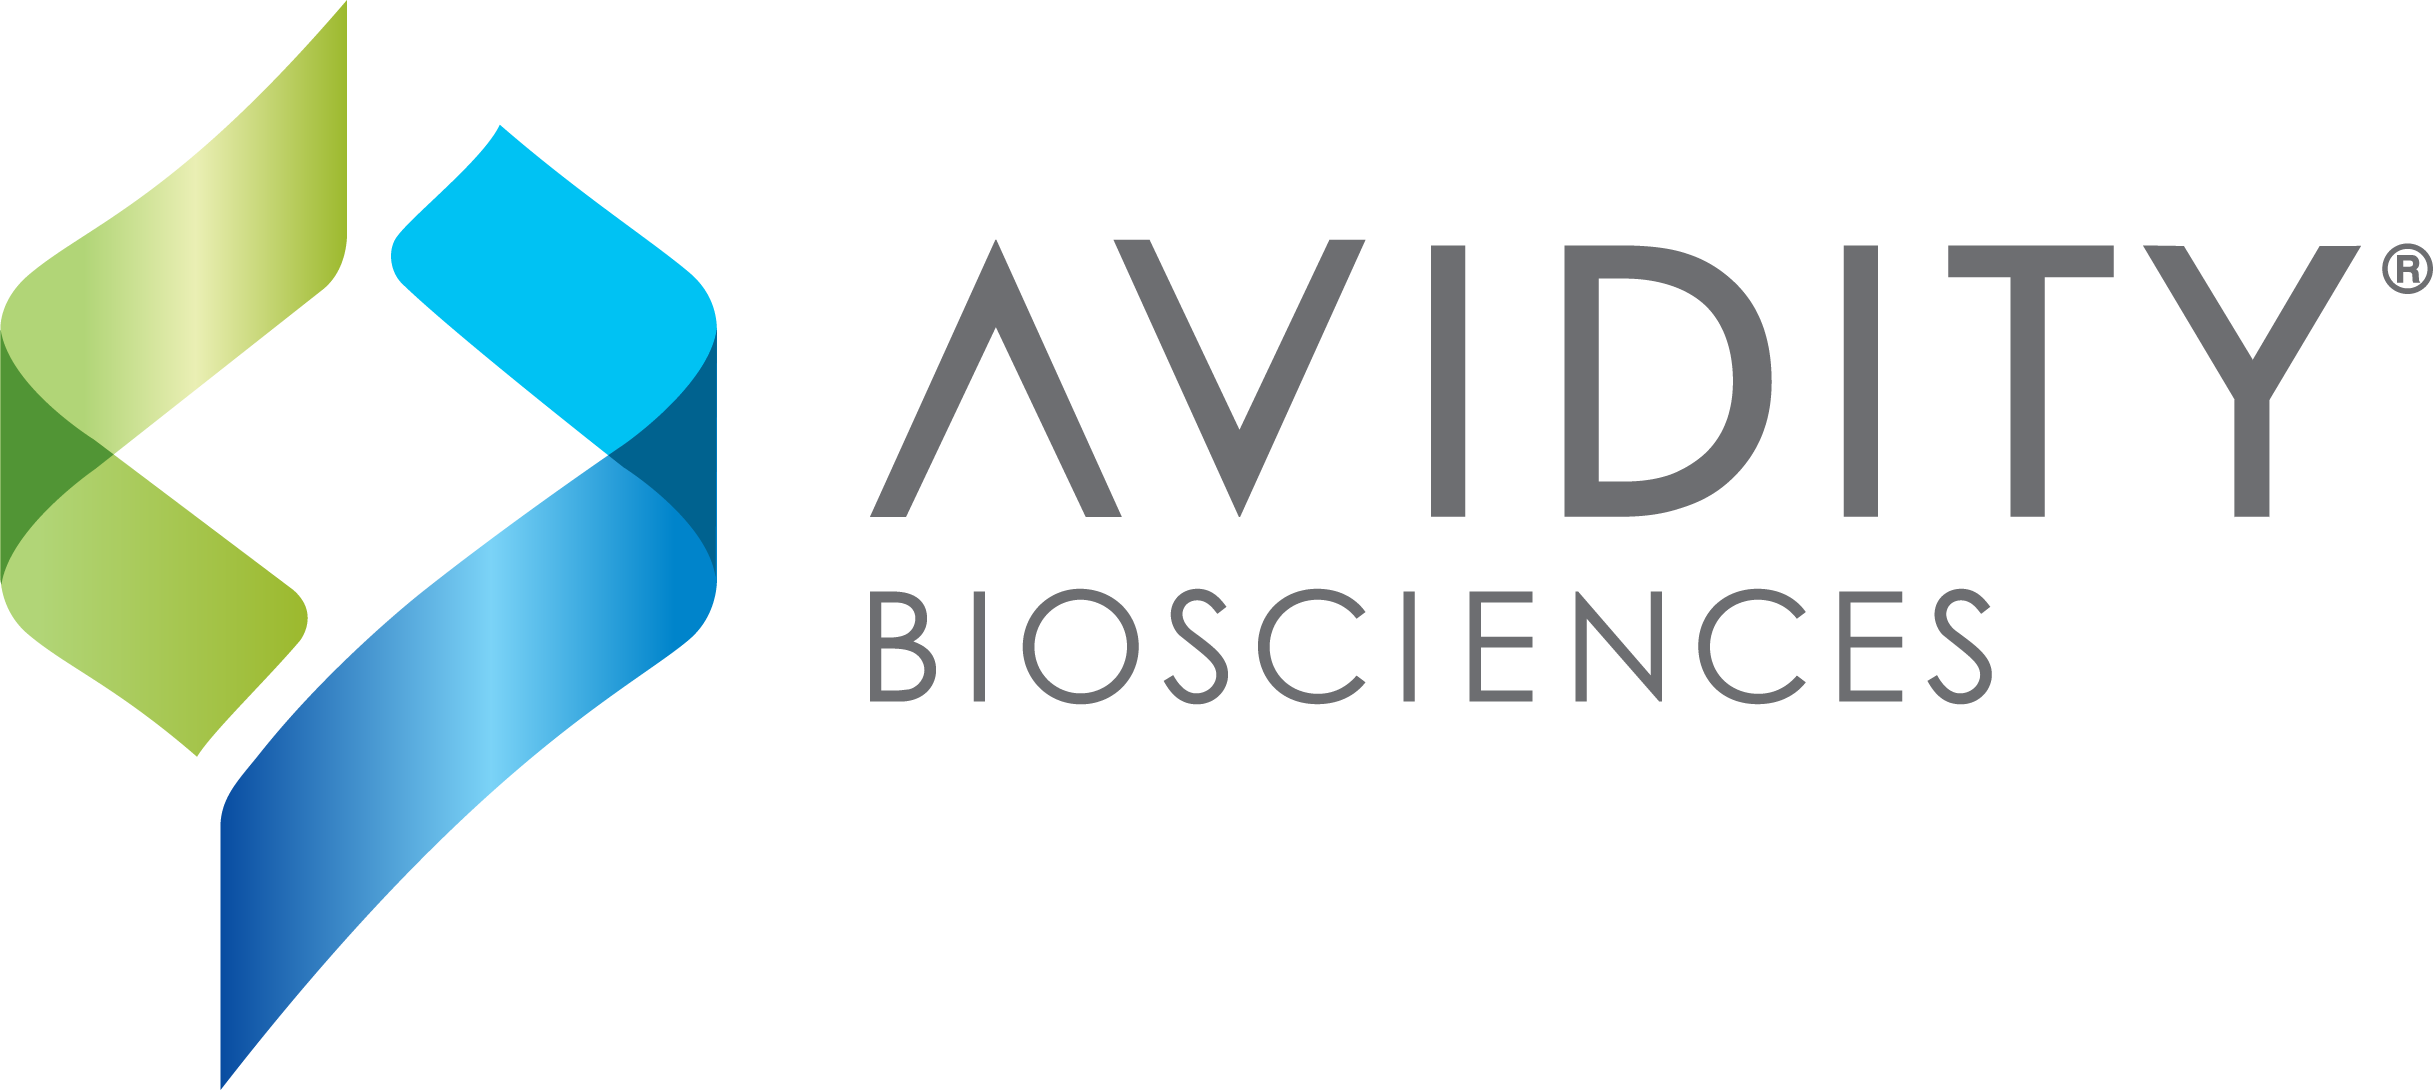 Avidity Biosciences logo large (transparent PNG)